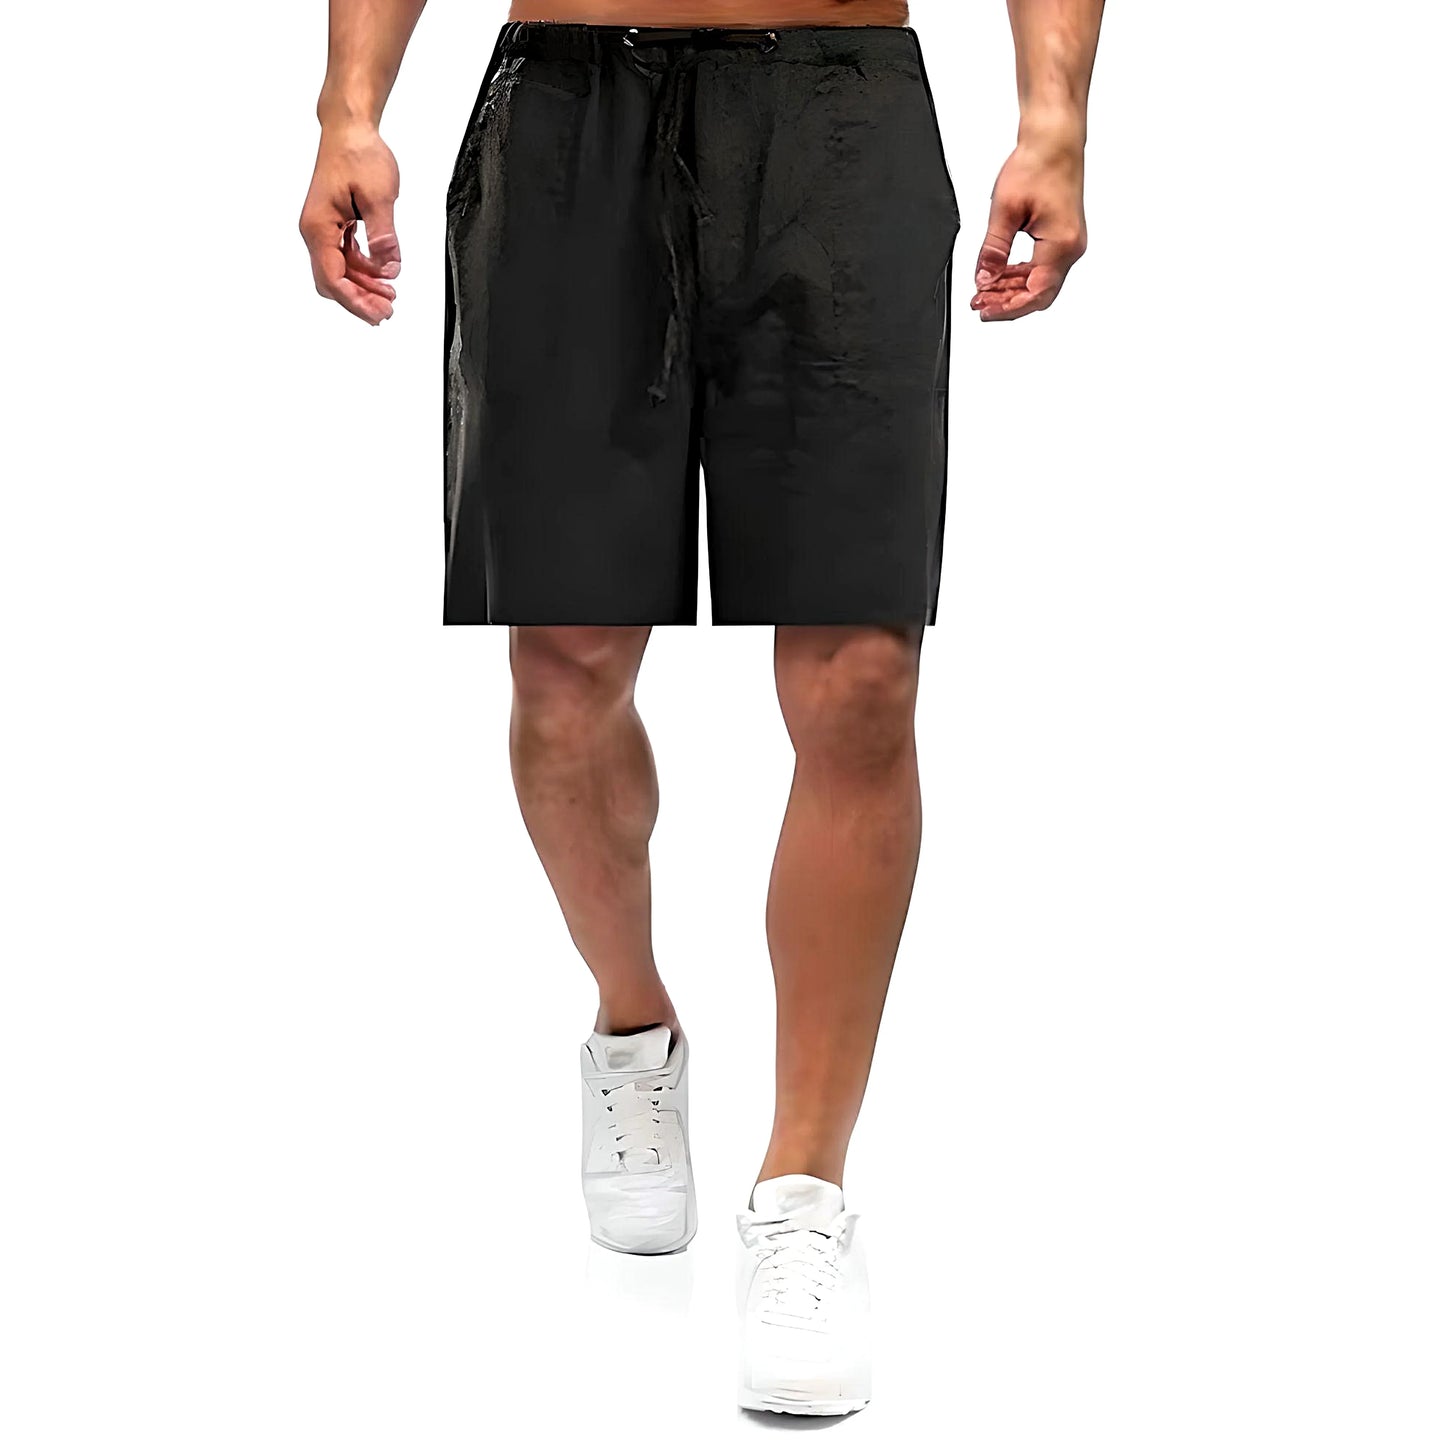 Charles | Casual Linen Shorts